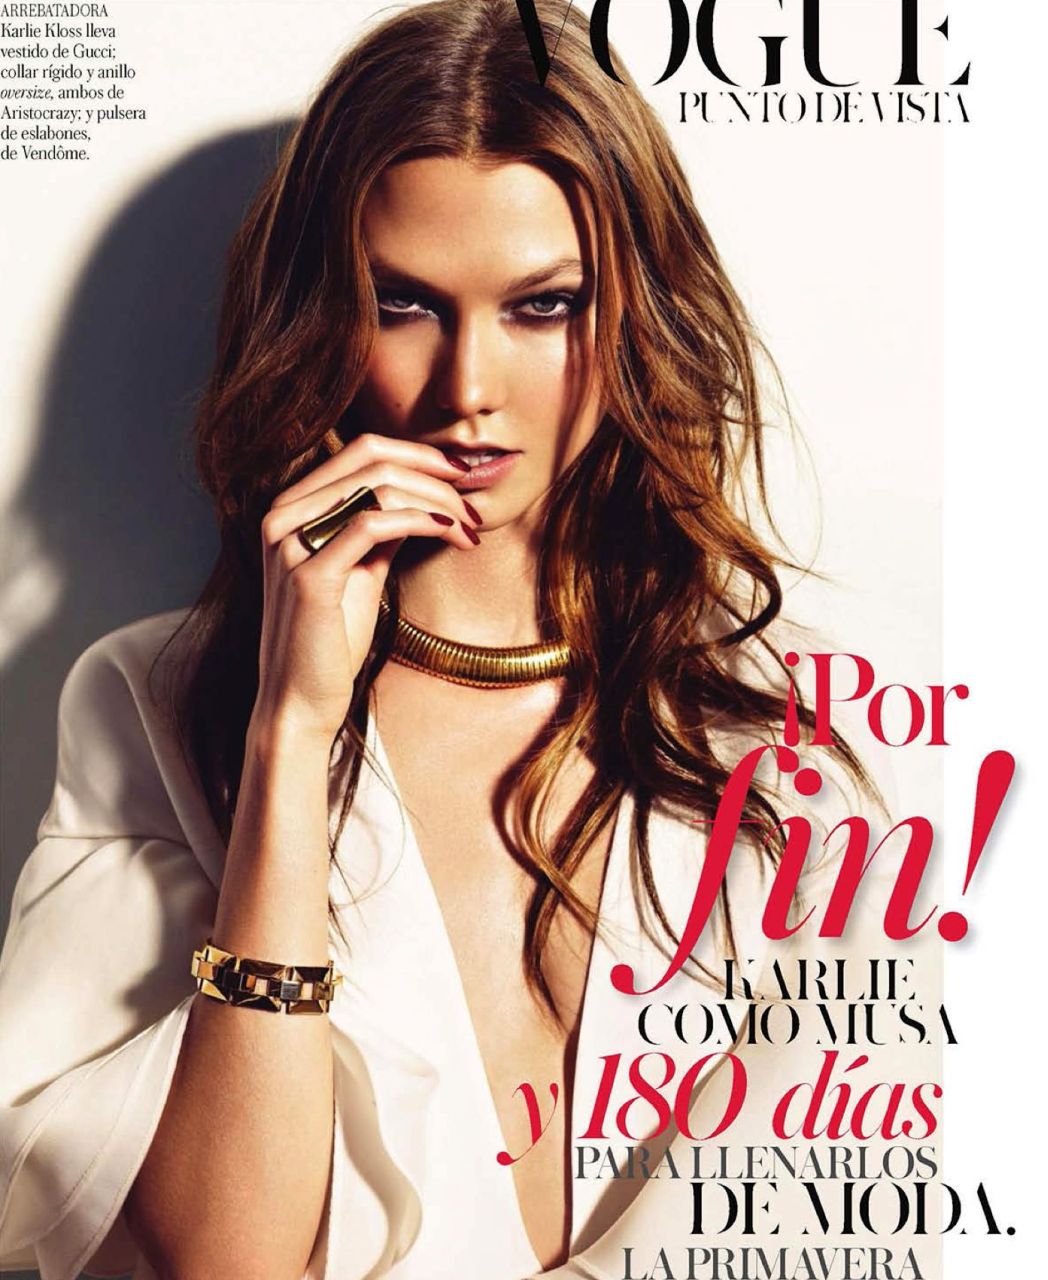 Karlie Kloss - amerykańska modelka w hiszpańskiej edycji magazynu Vogue